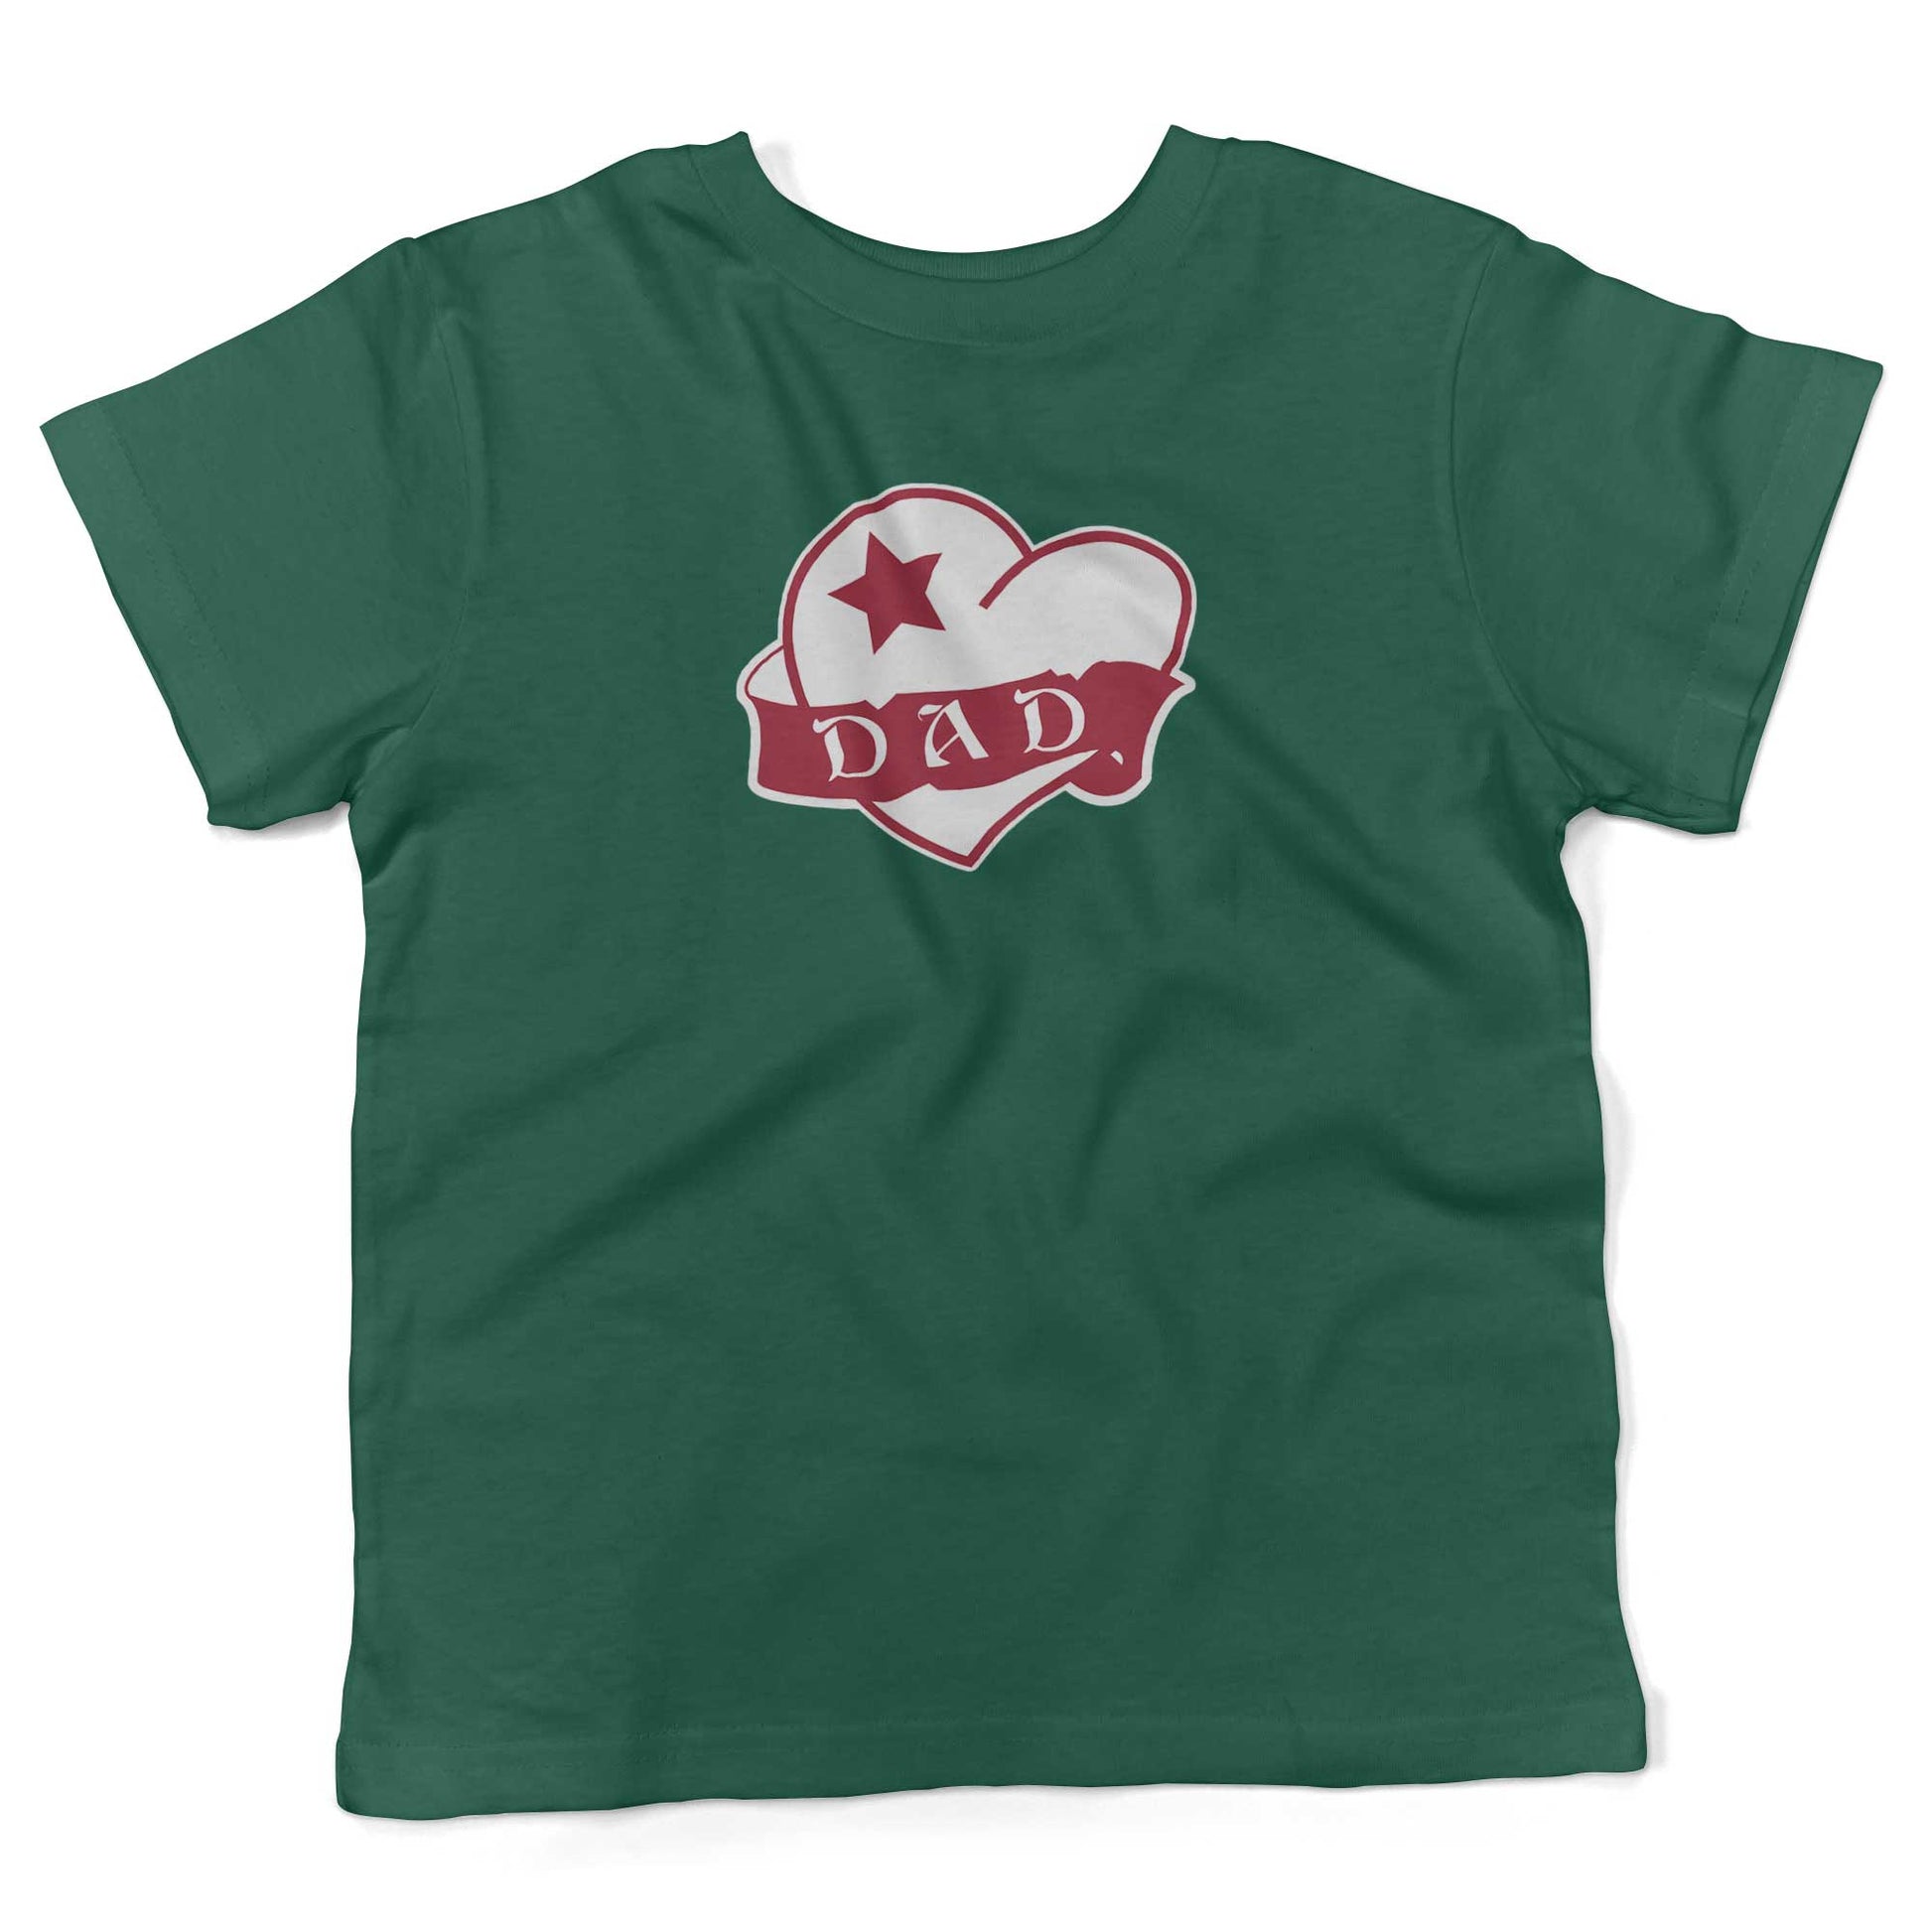 Dad Tattoo Heart Toddler Shirt-Kelly Green-2T